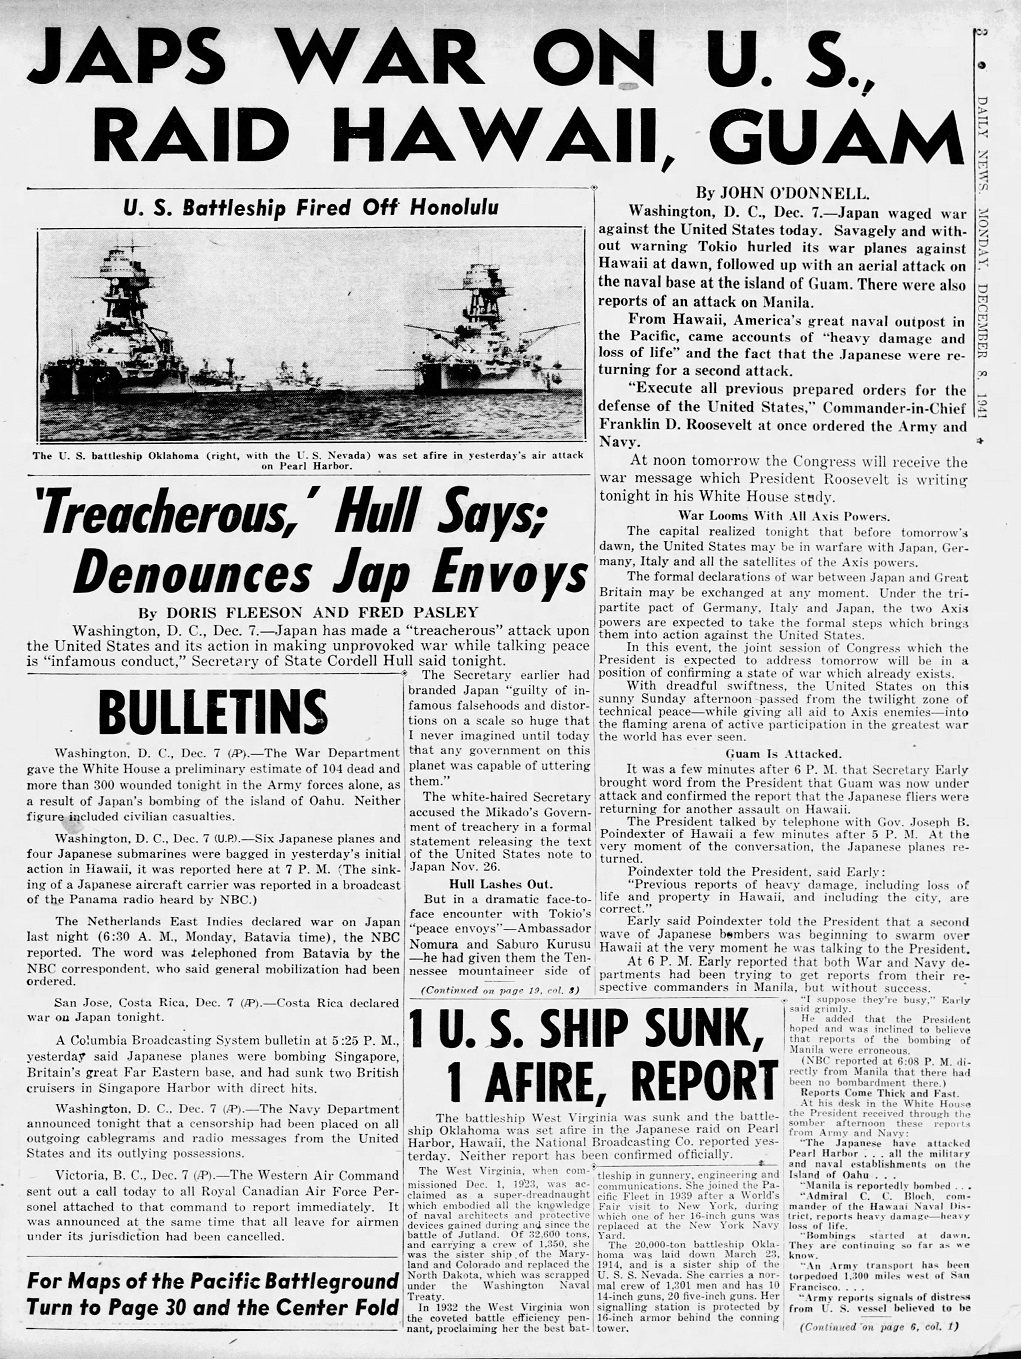 Daily_News_Mon__Dec_8__1941_(1).jpg